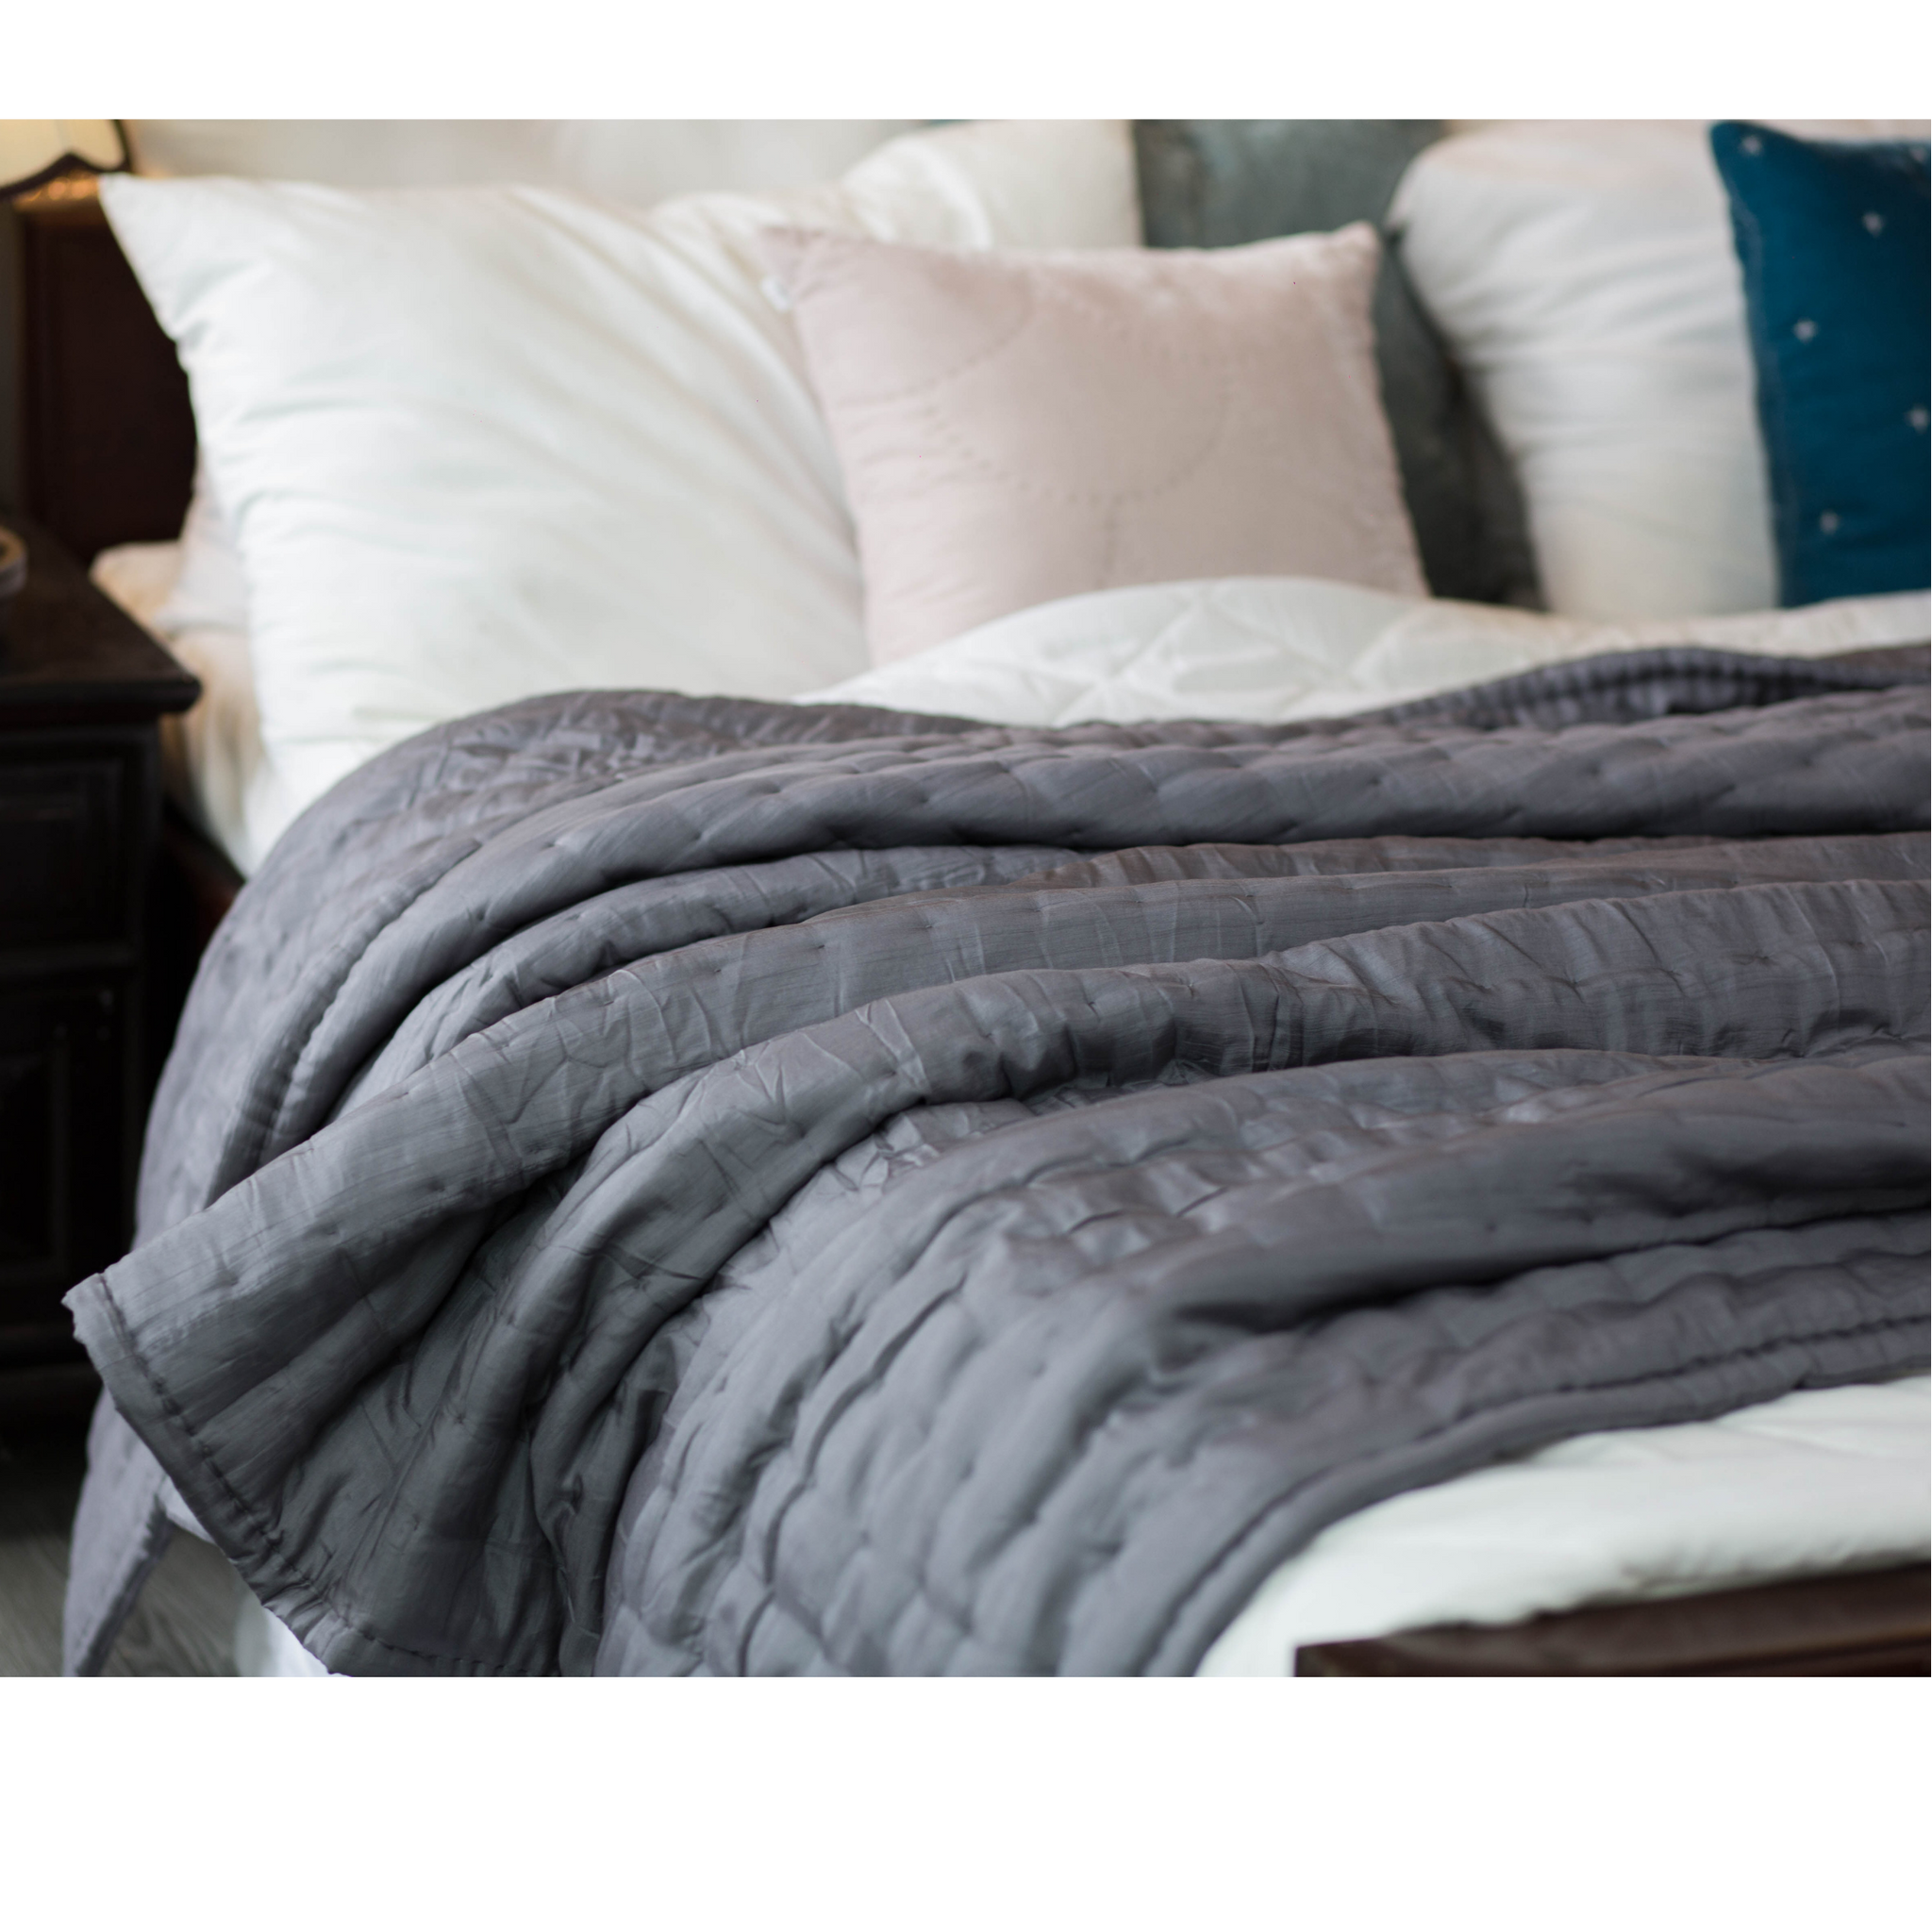 Mulberry Silk Bedding Set- Gray Blanket & Shams - Box Hand Stitched by artisans